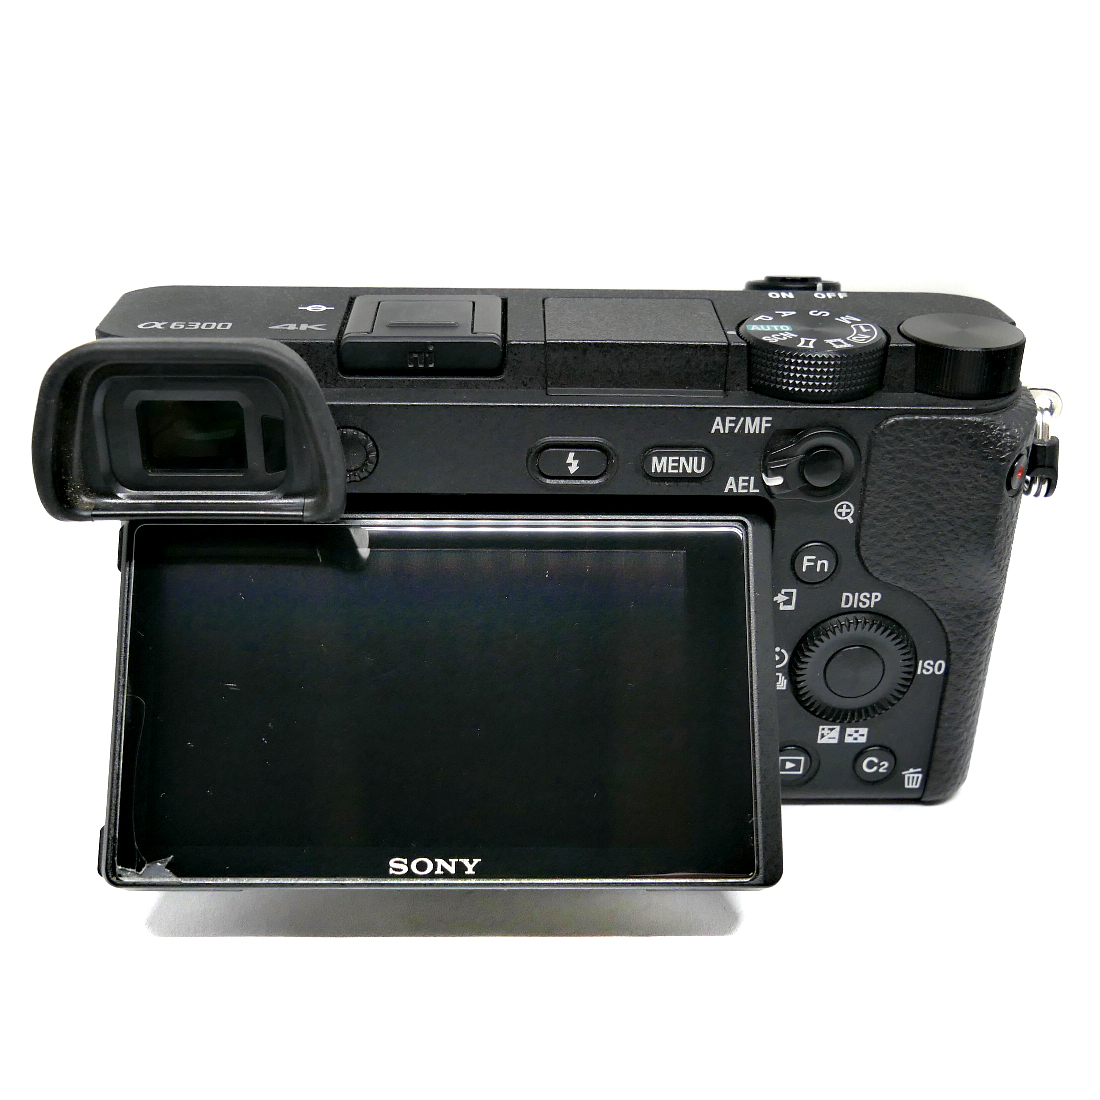 (Myyty) Sony A6300 -runko (SC:24420) (käytetty) 